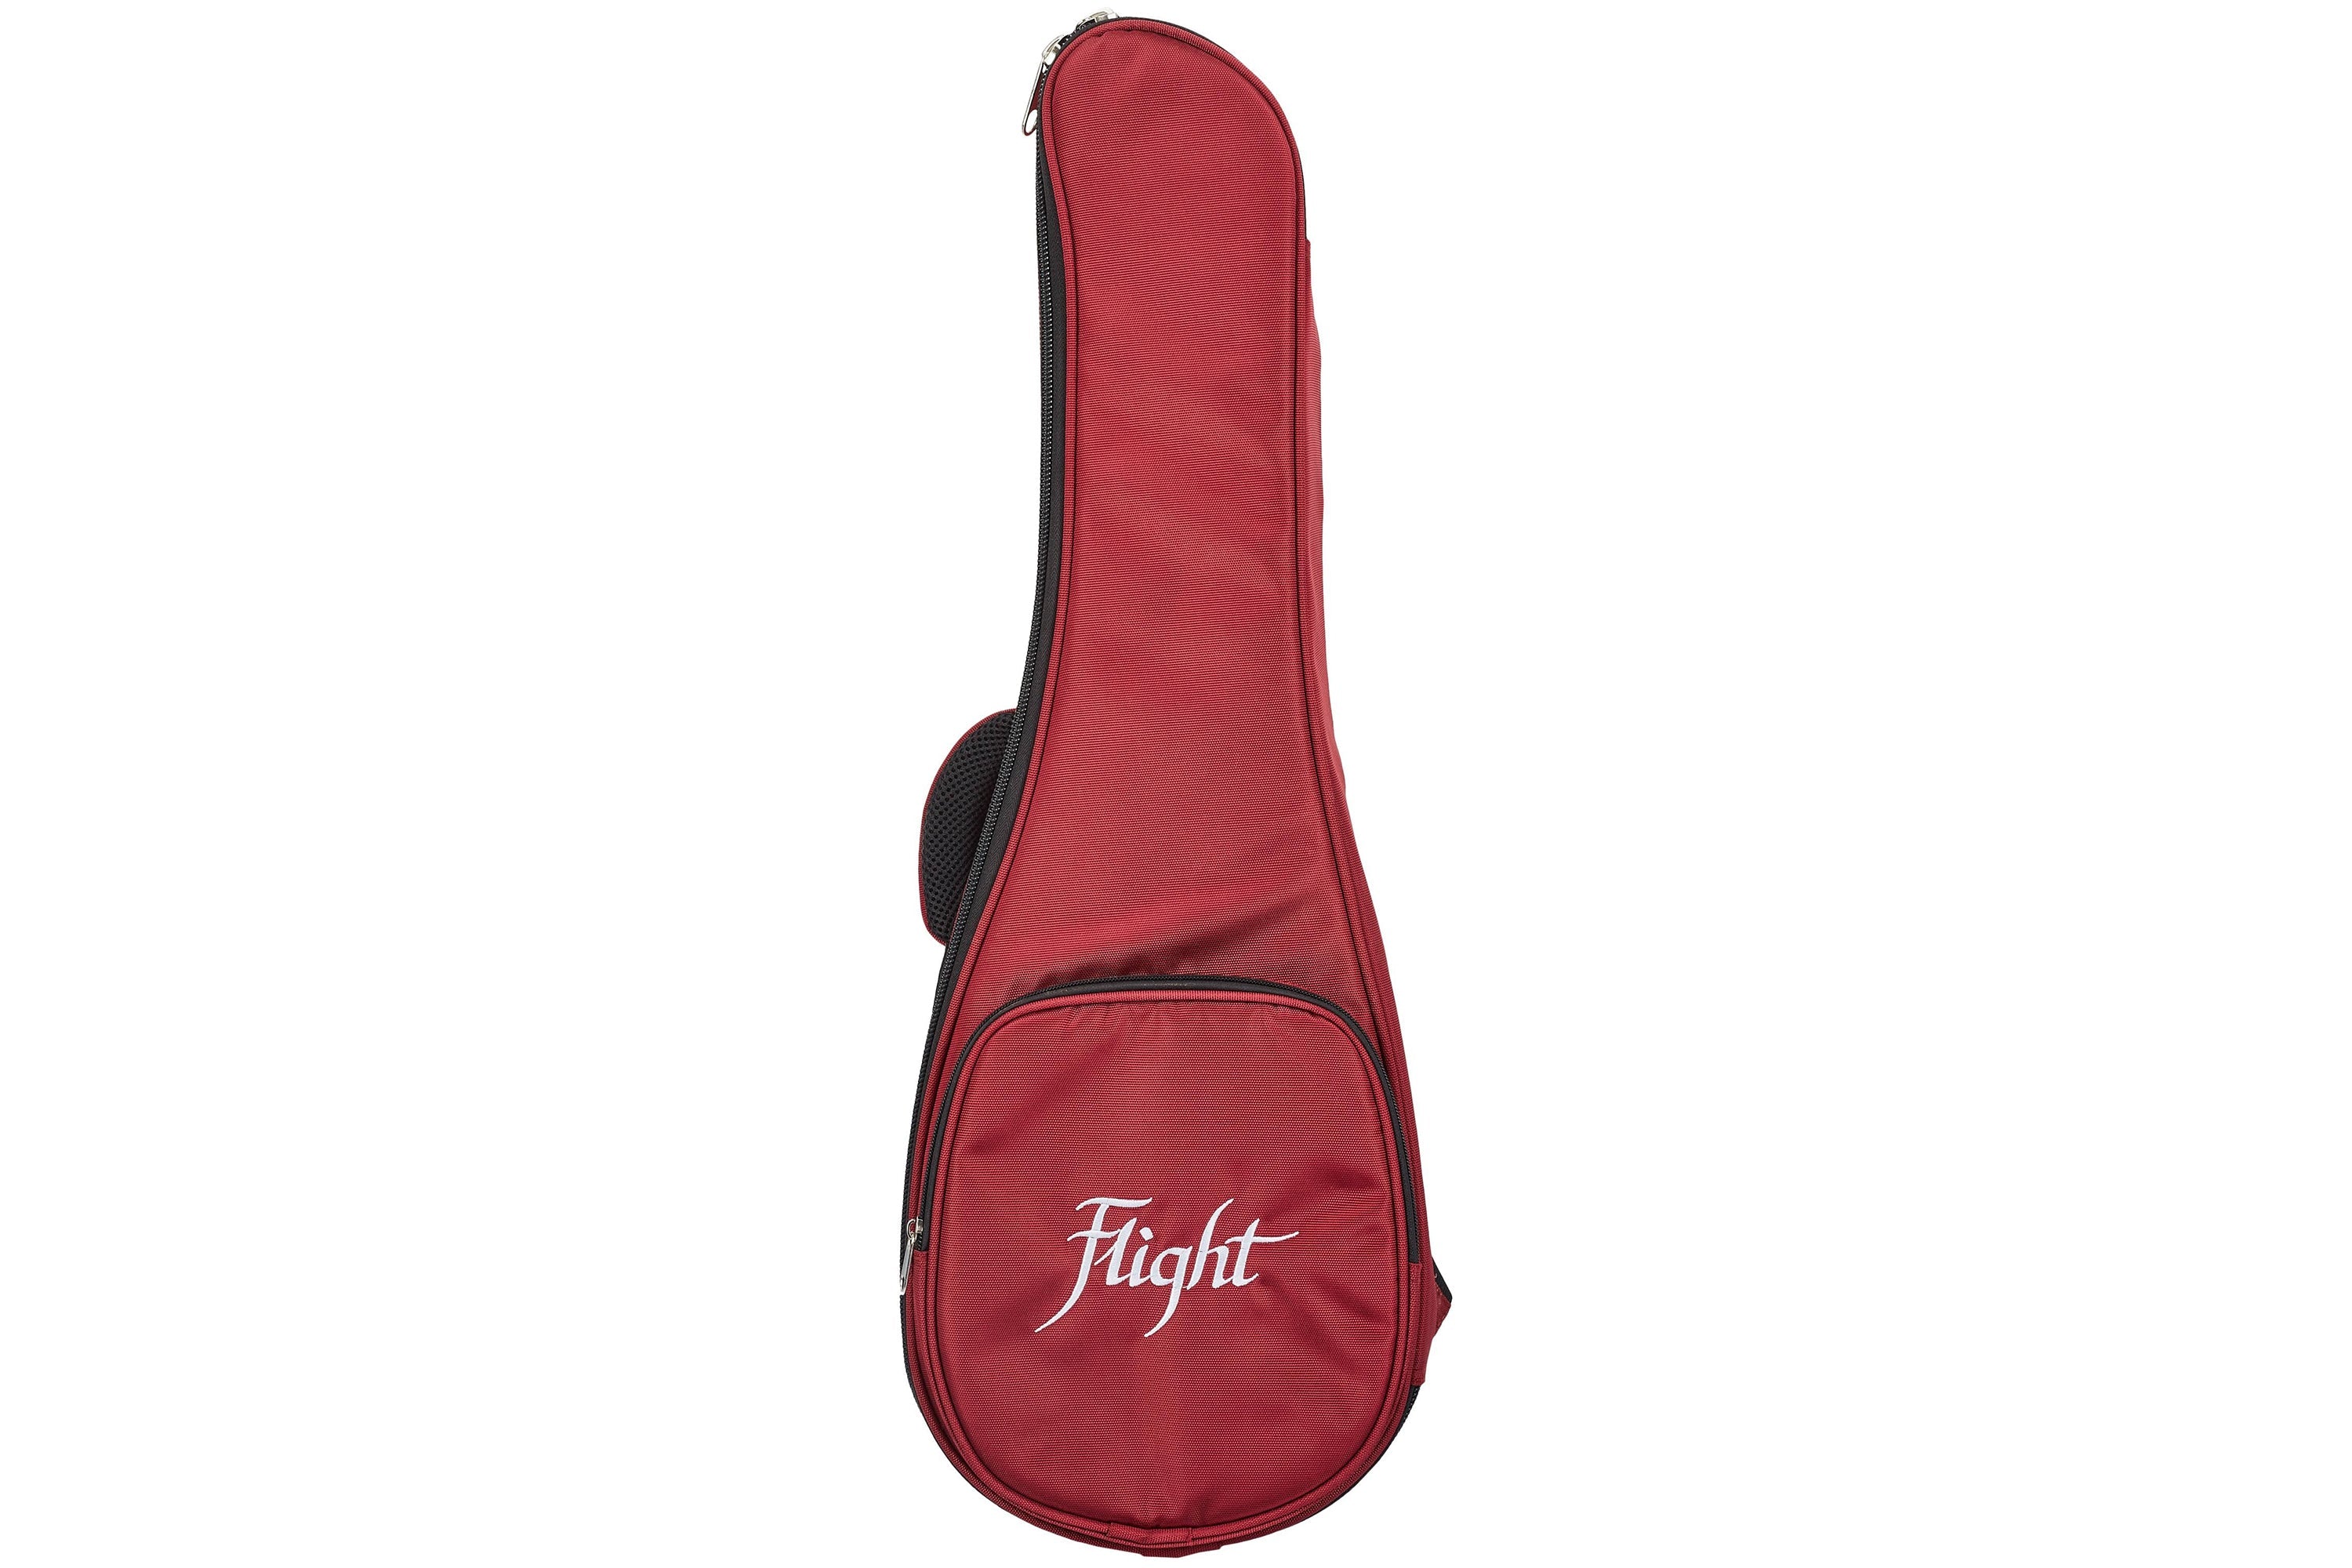 [BAG BLOWOUT] Flight Premium Padded Gigbag - SUPER TENOR - RED